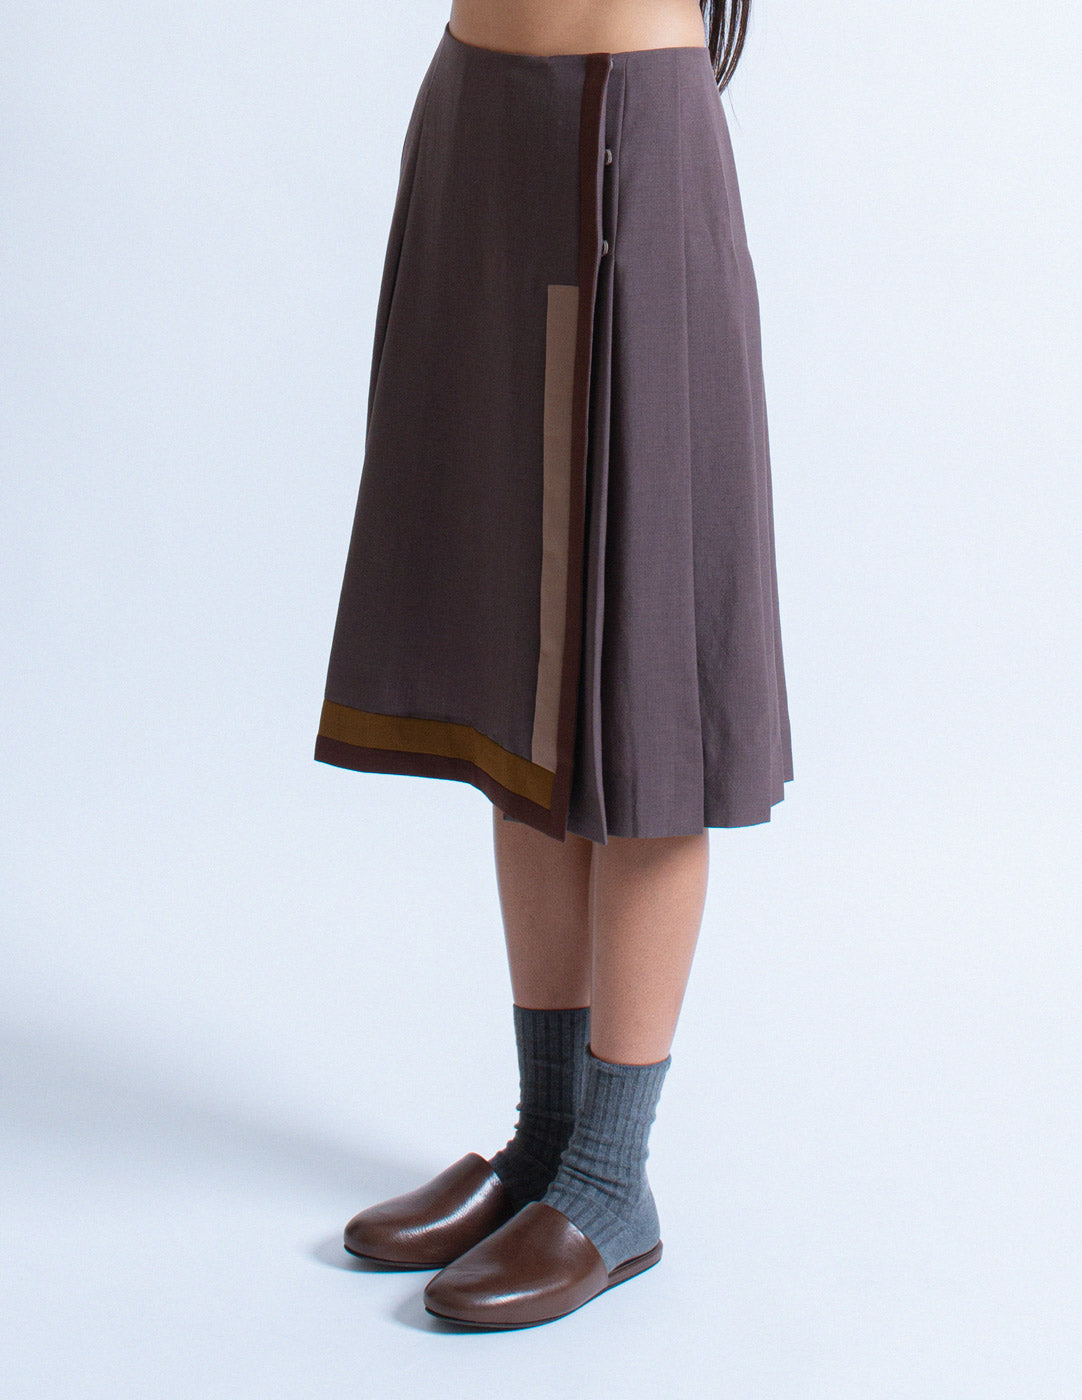 Prada gray mohair wool pleated wrap skirt side detail